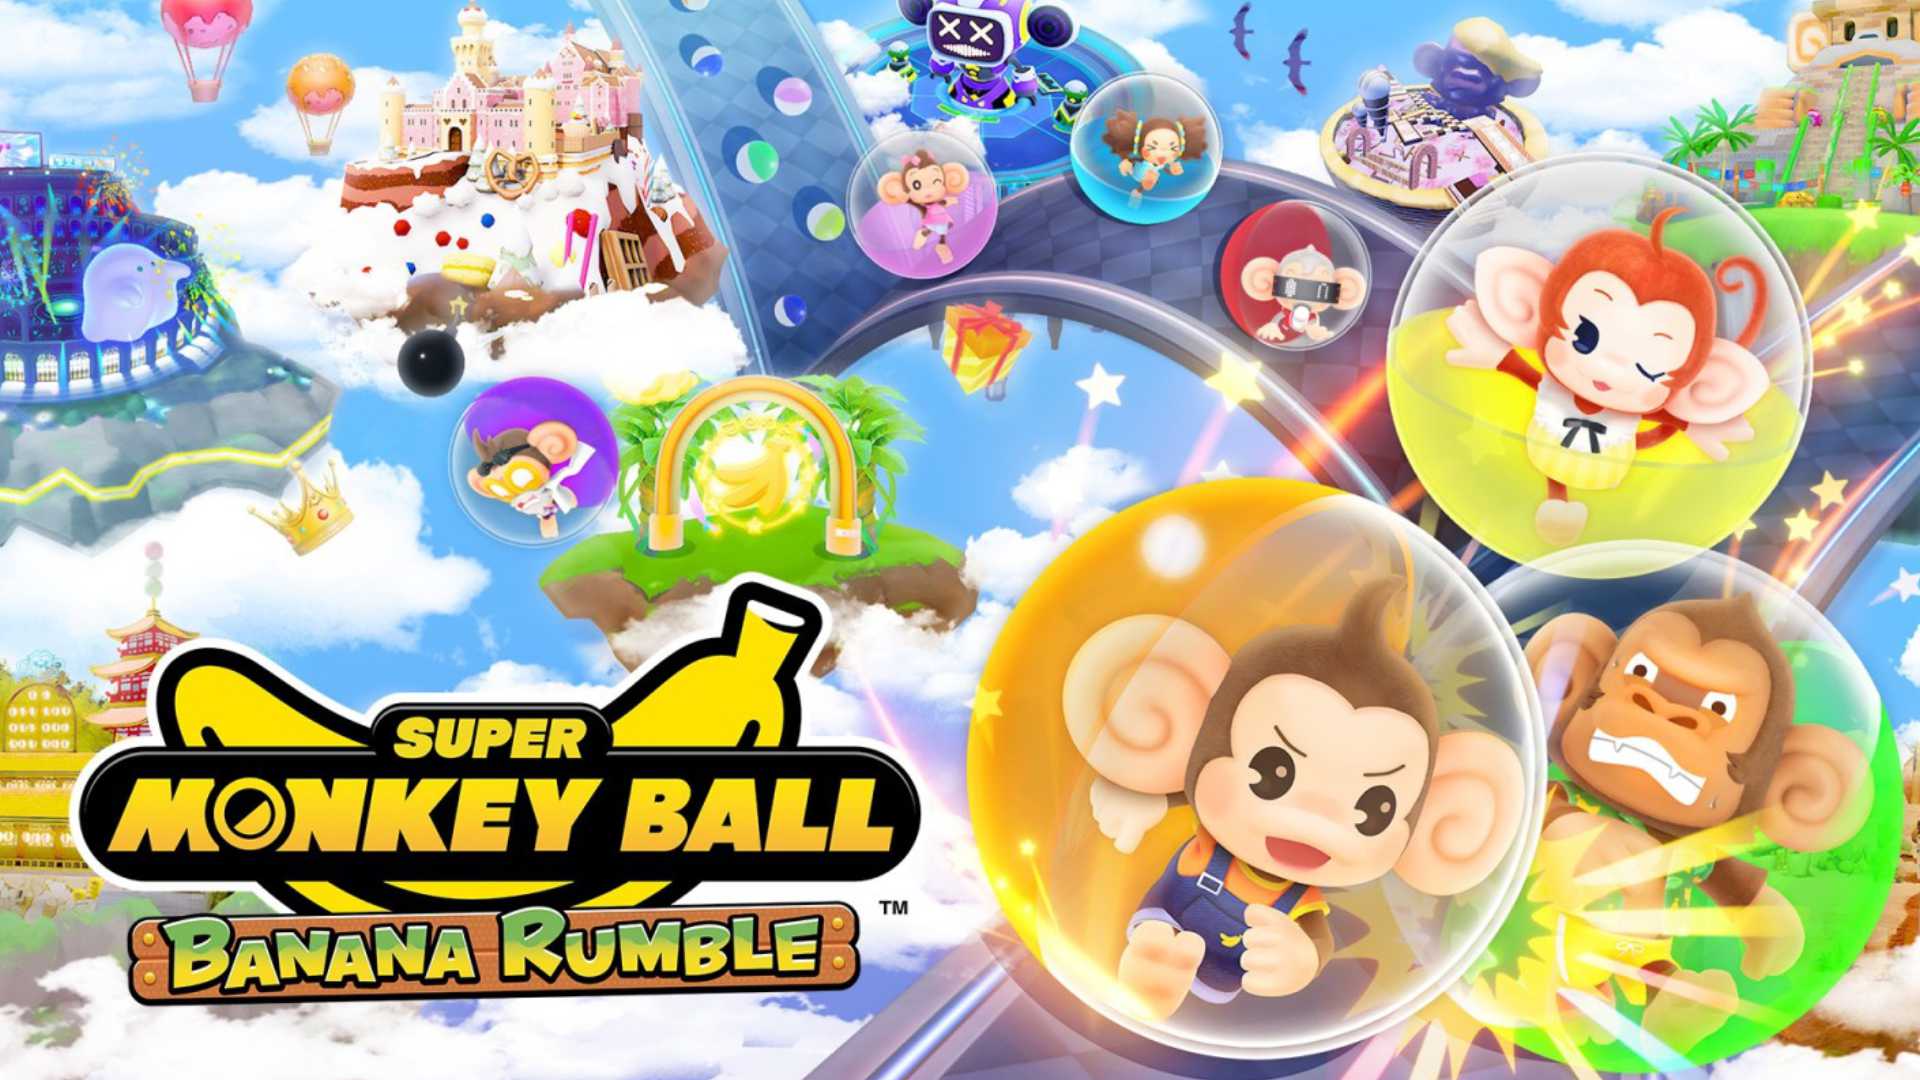 Super Monkey Ball Banana Rumble: Gameplay-Video gibt tiefere Einblicke in den Affen-Racer